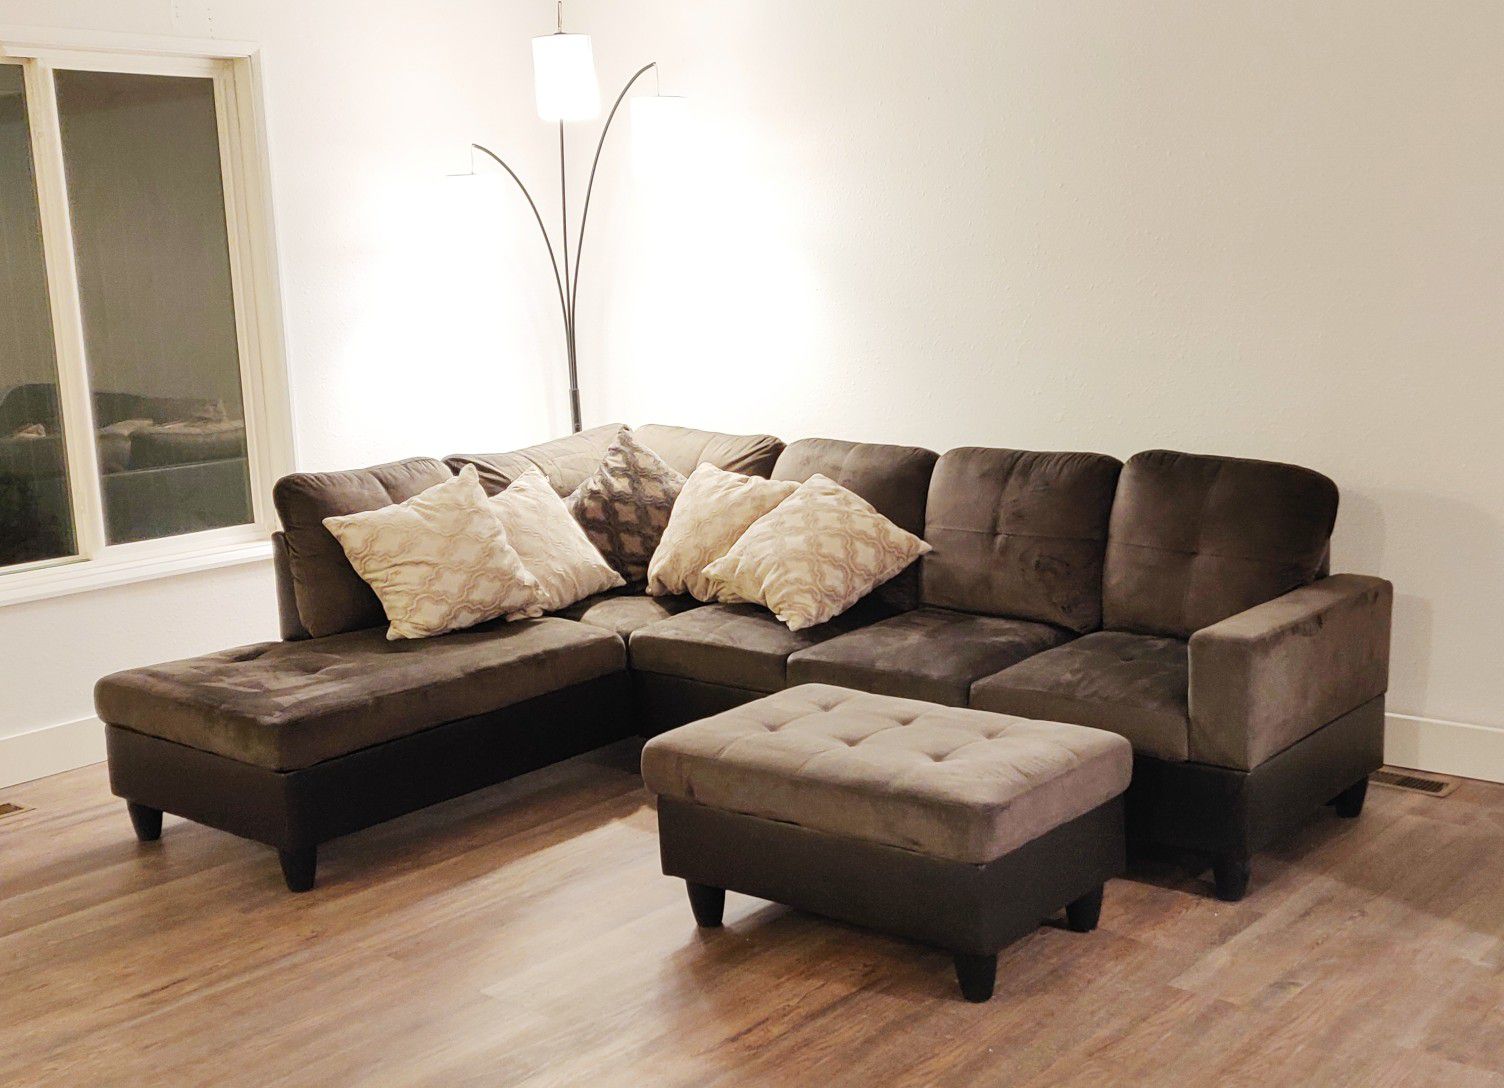 Sectional sofa with ottoman